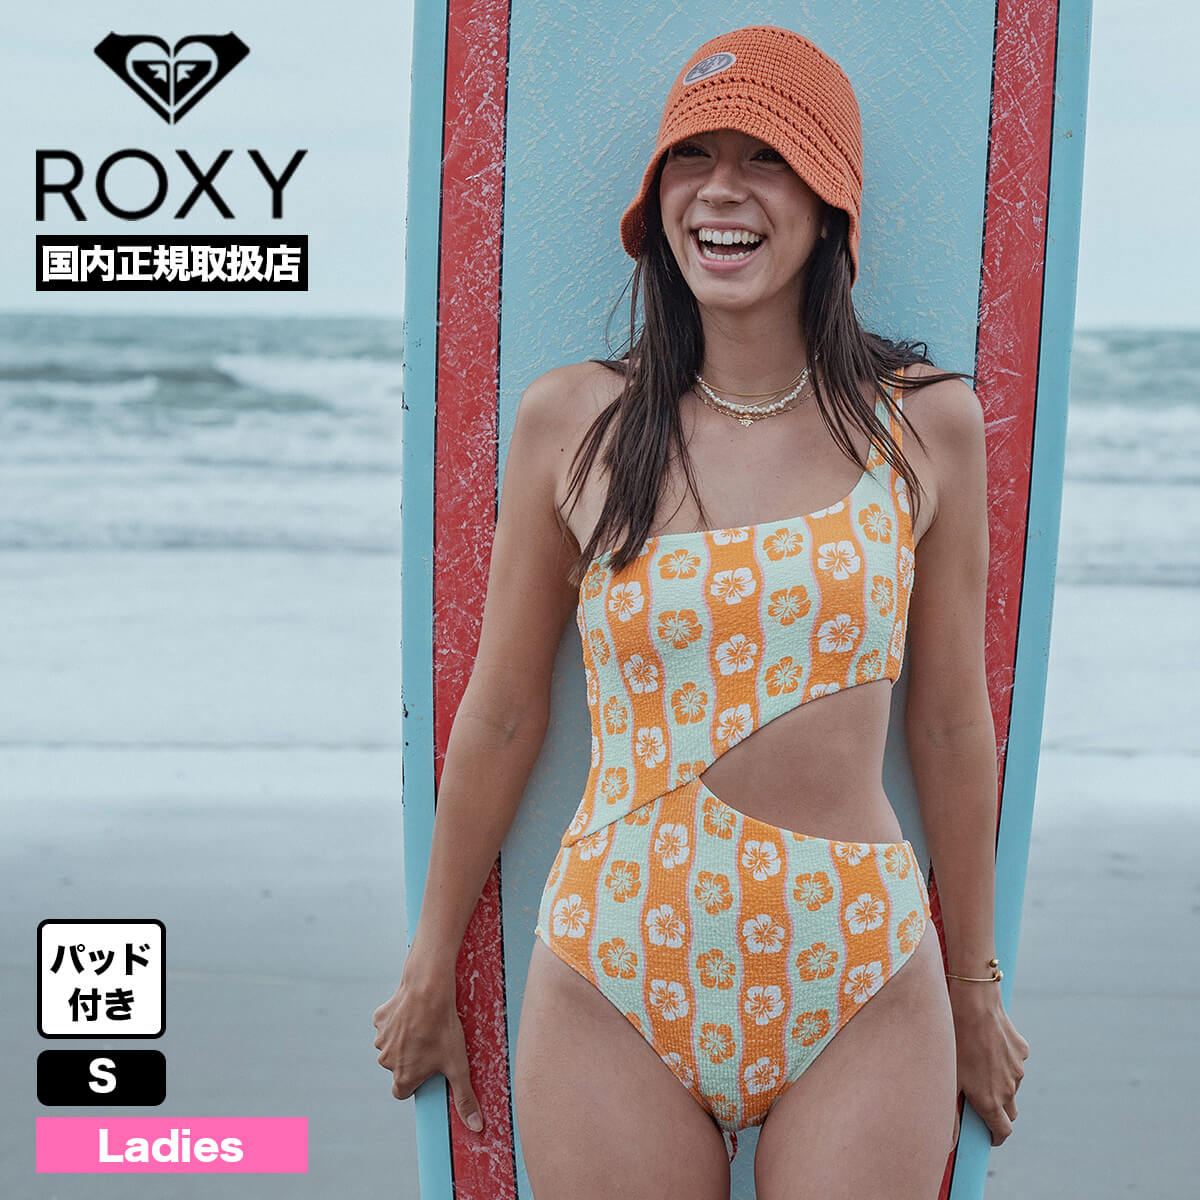 Roxyのスイミングウェア - ショートパンツ